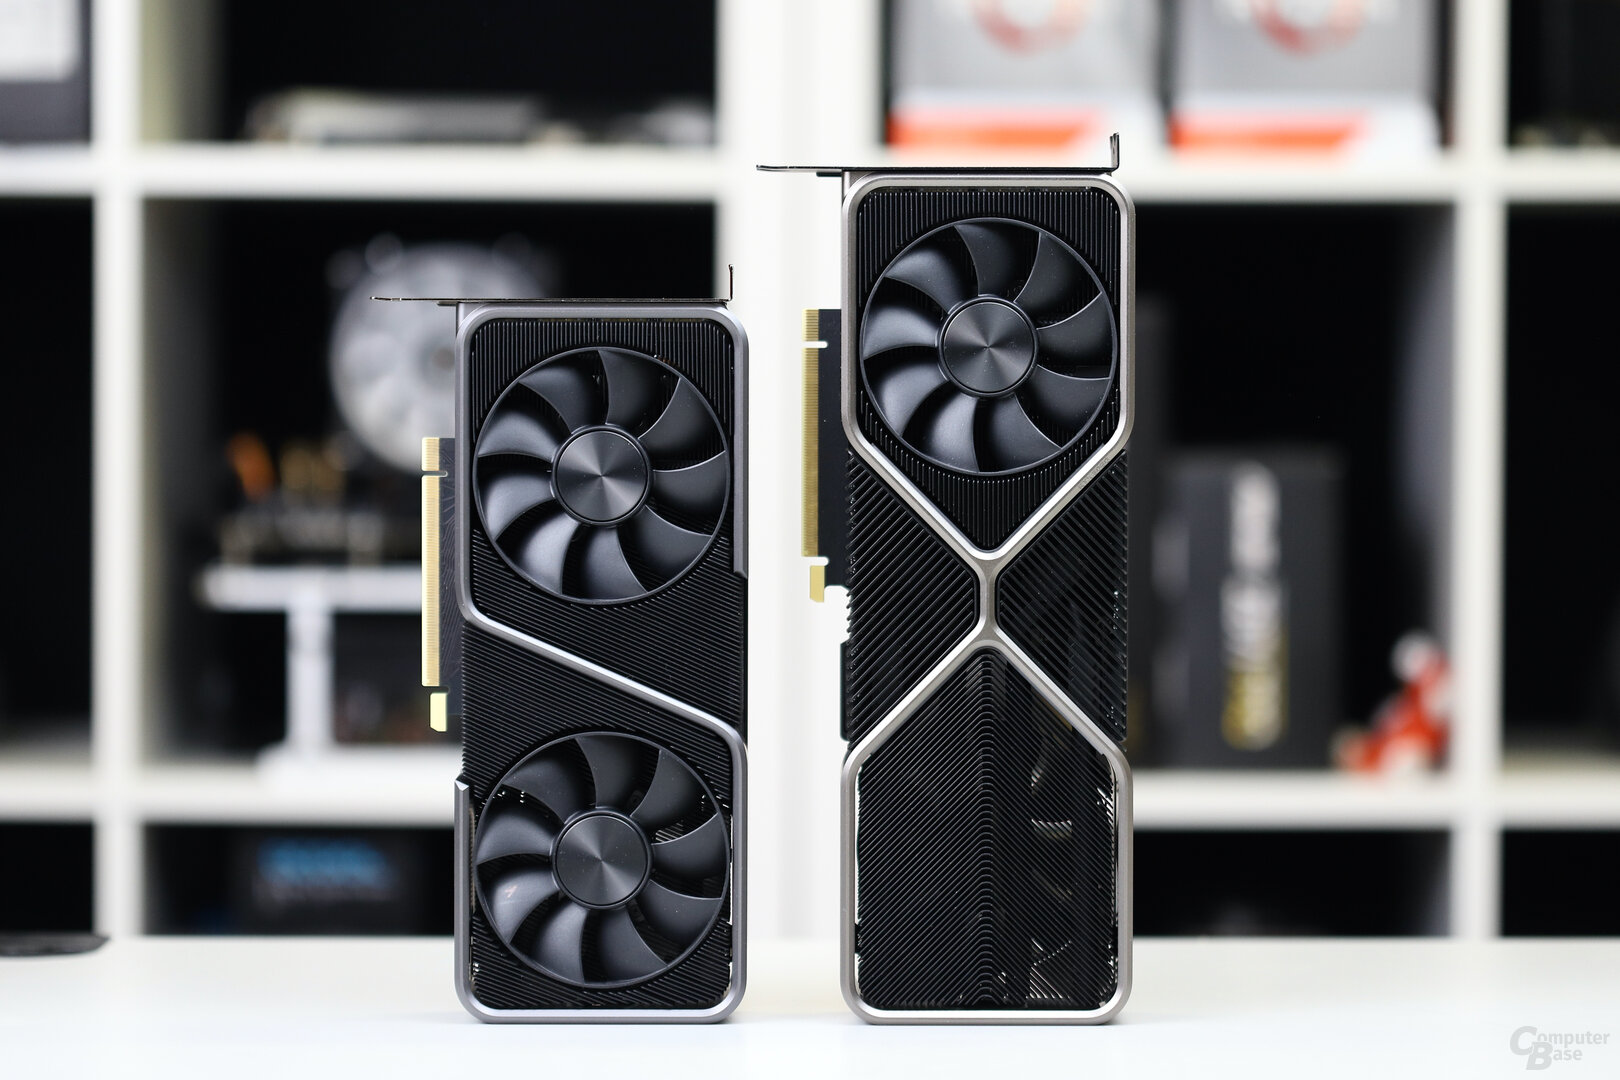 Nvidia GeForce RTX 3070 FE (links) vs. RTX 3080 FE (rechts)